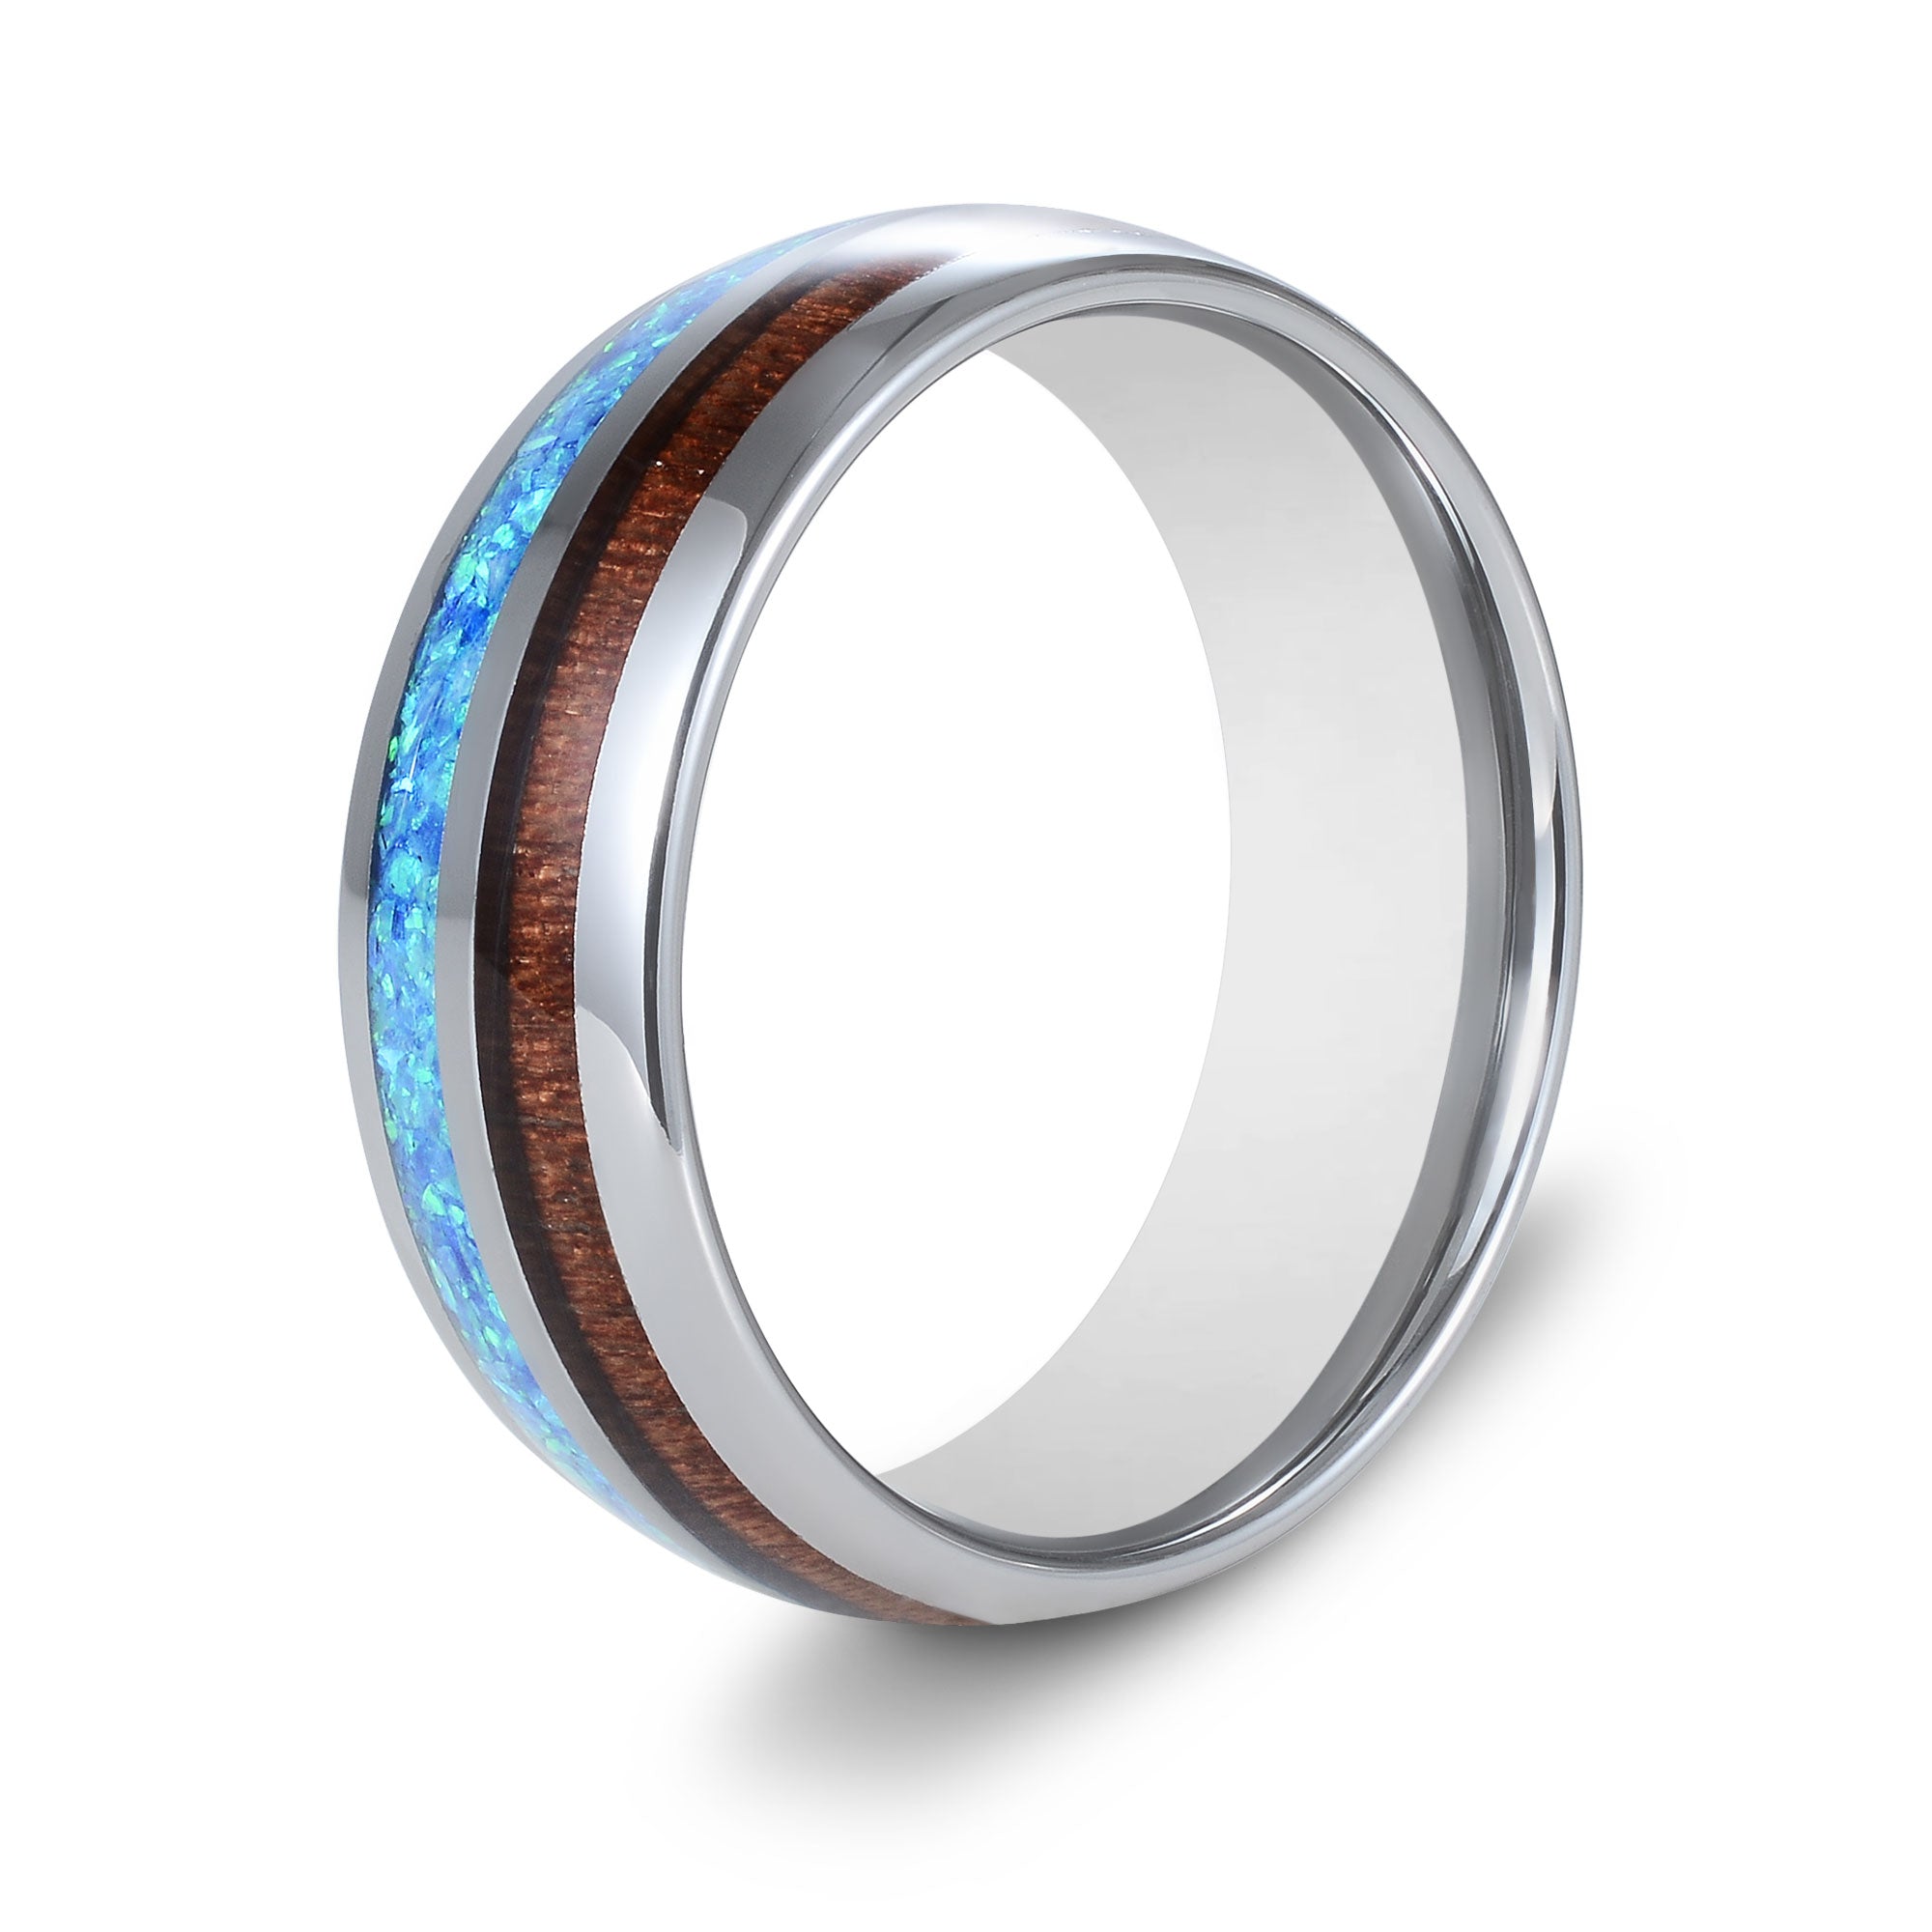 The Embark - Silver Opal Tungsten Koa Wood Ring